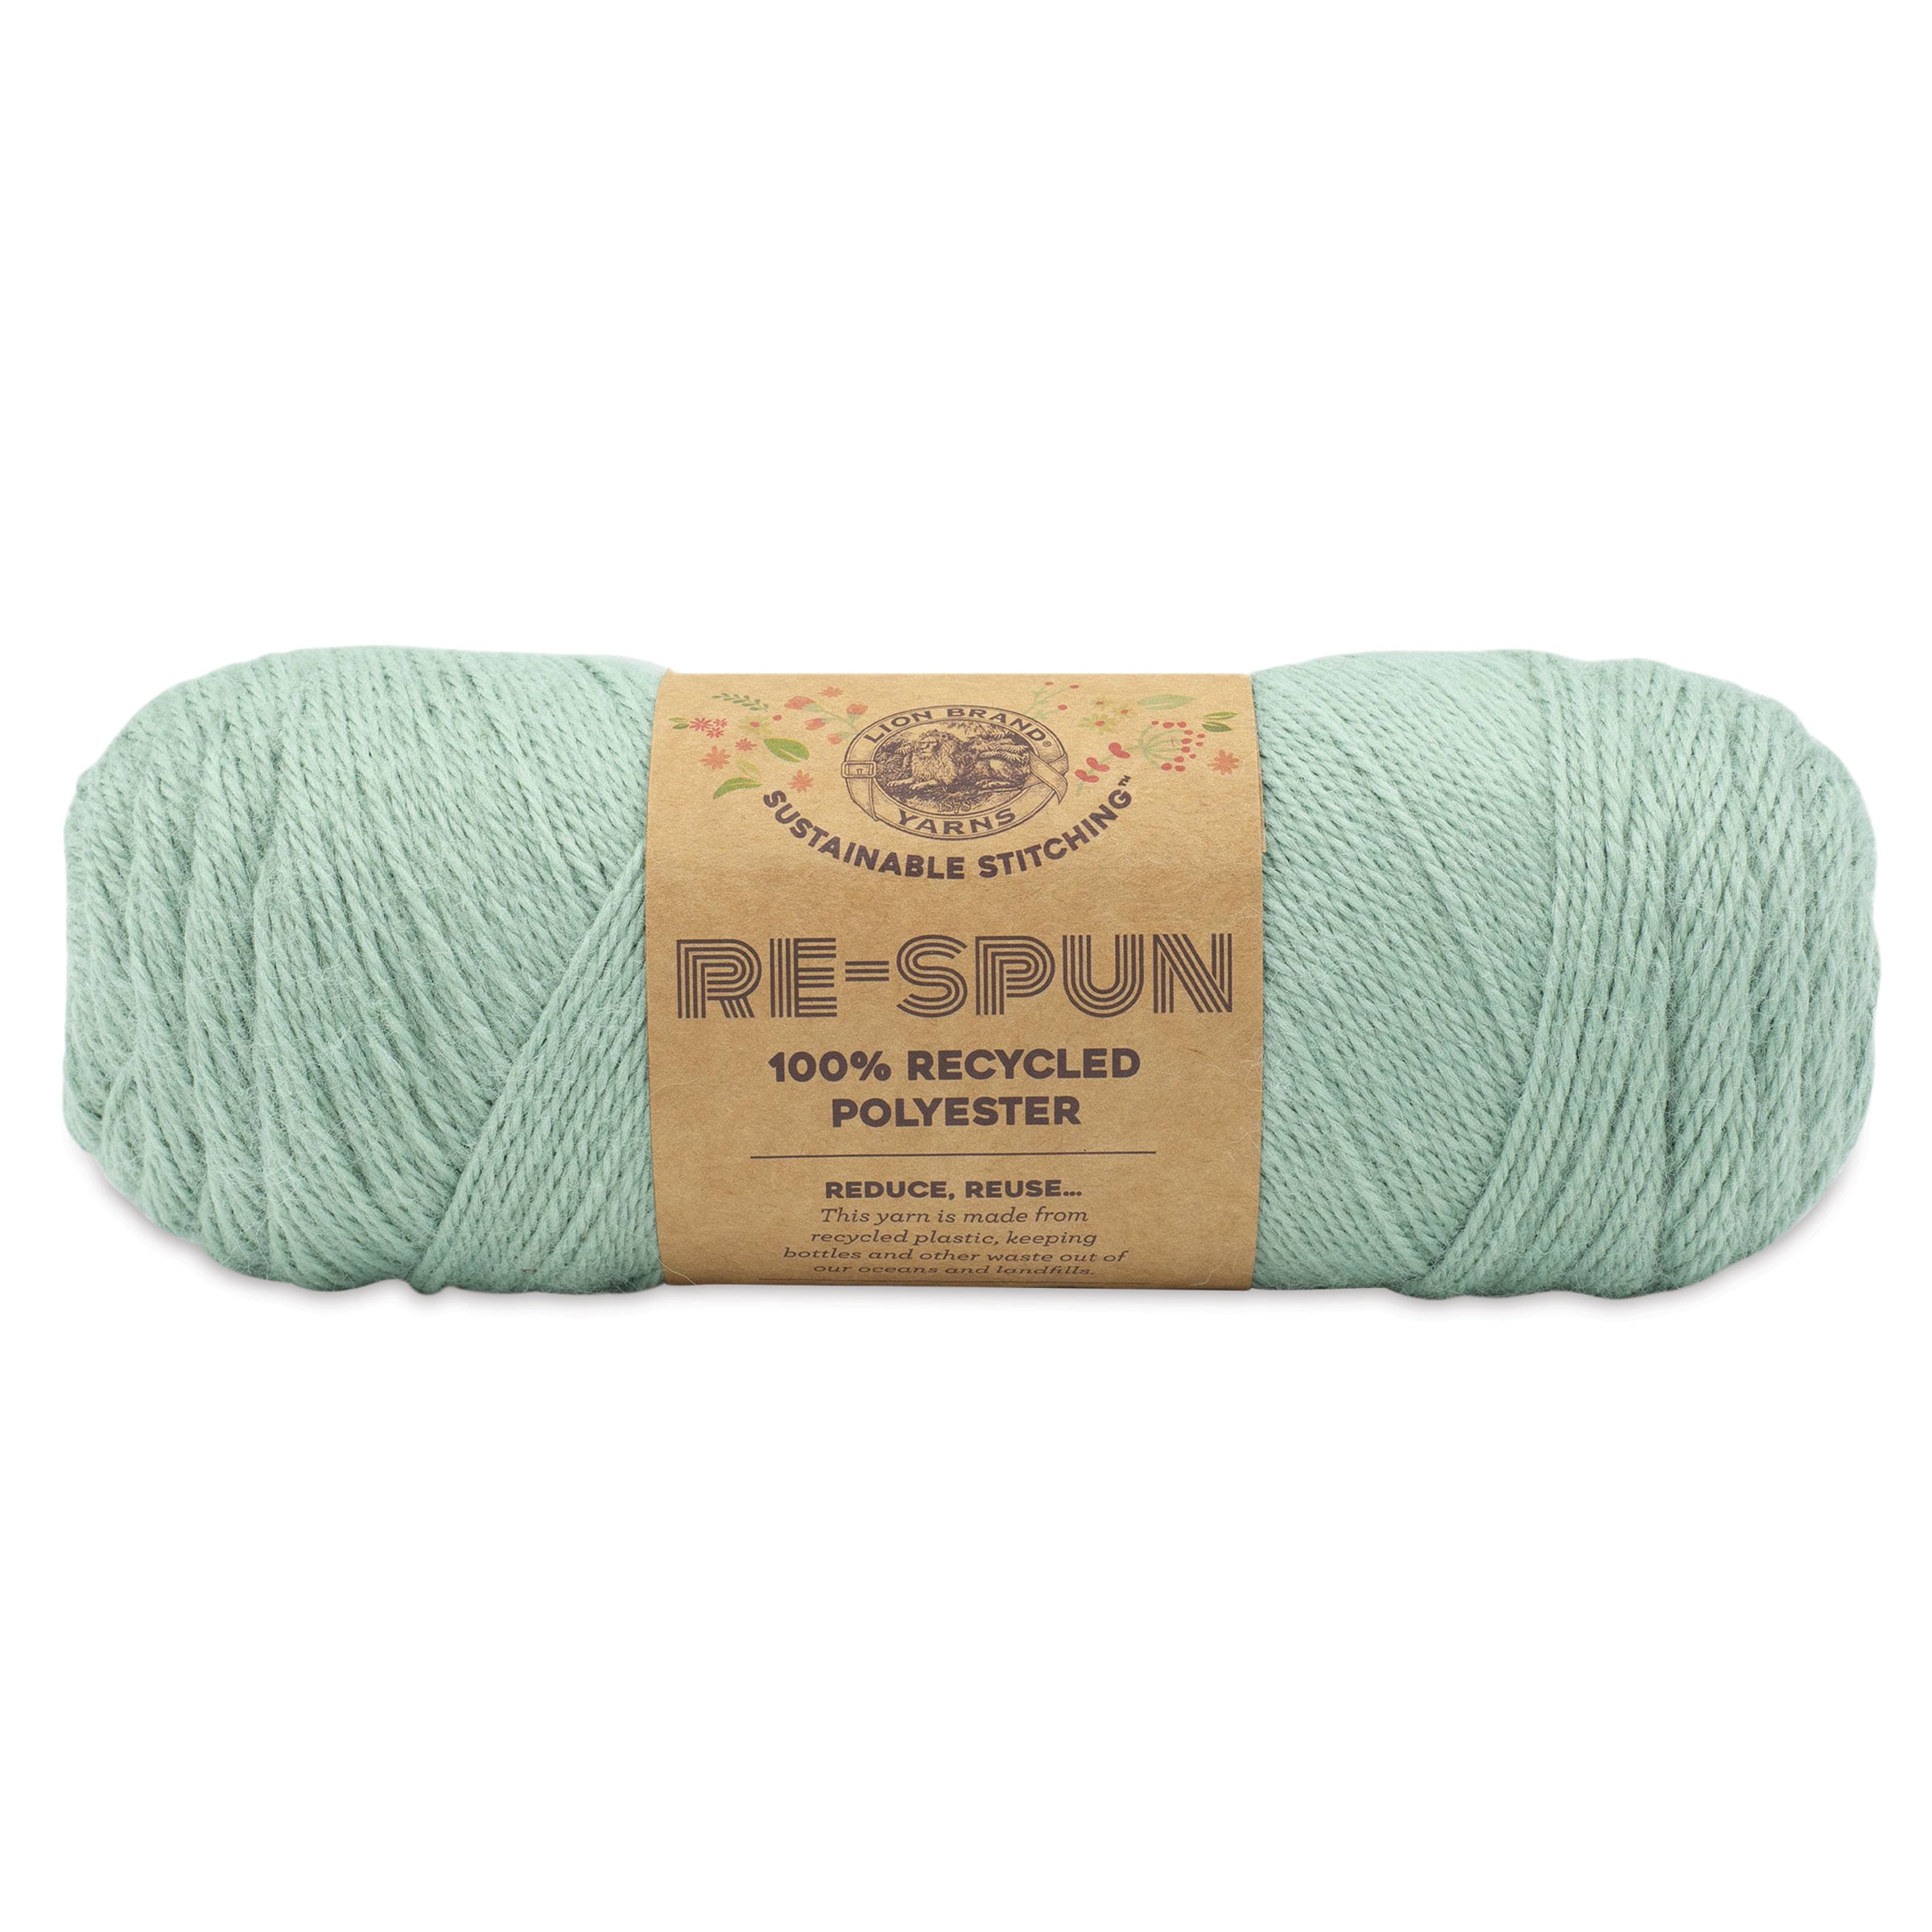 Lion Brand Re-Spun Yarn - Whipped Cream